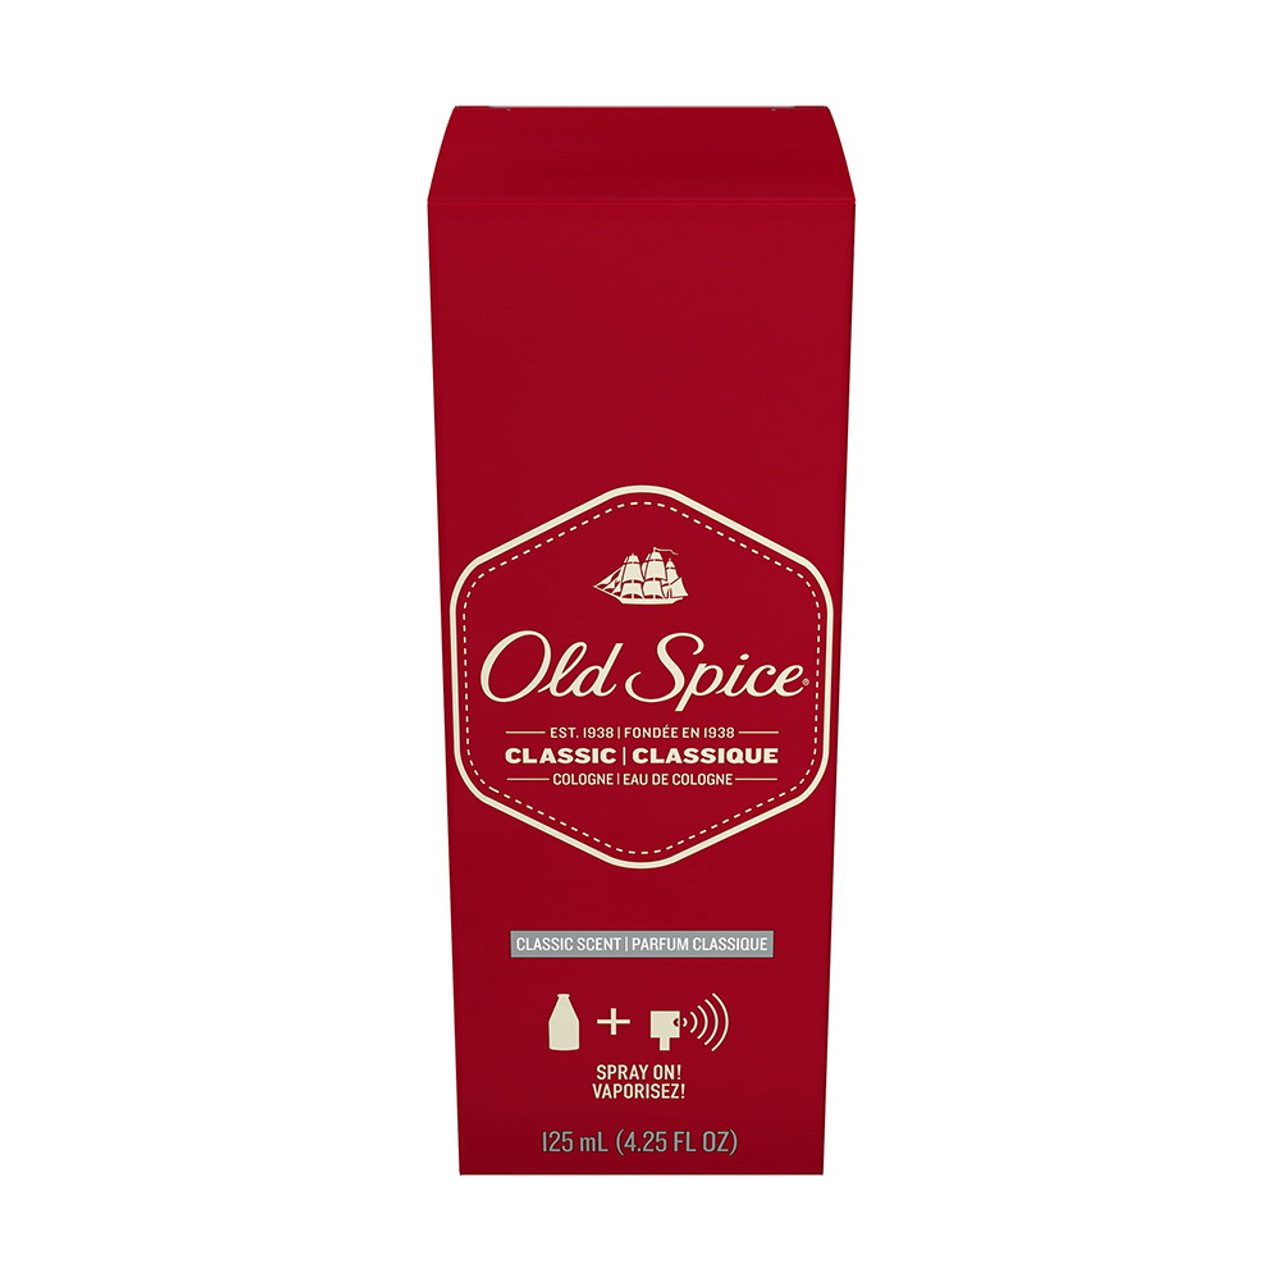 Old Spice Classic Cologne Spray, 4.25 oz